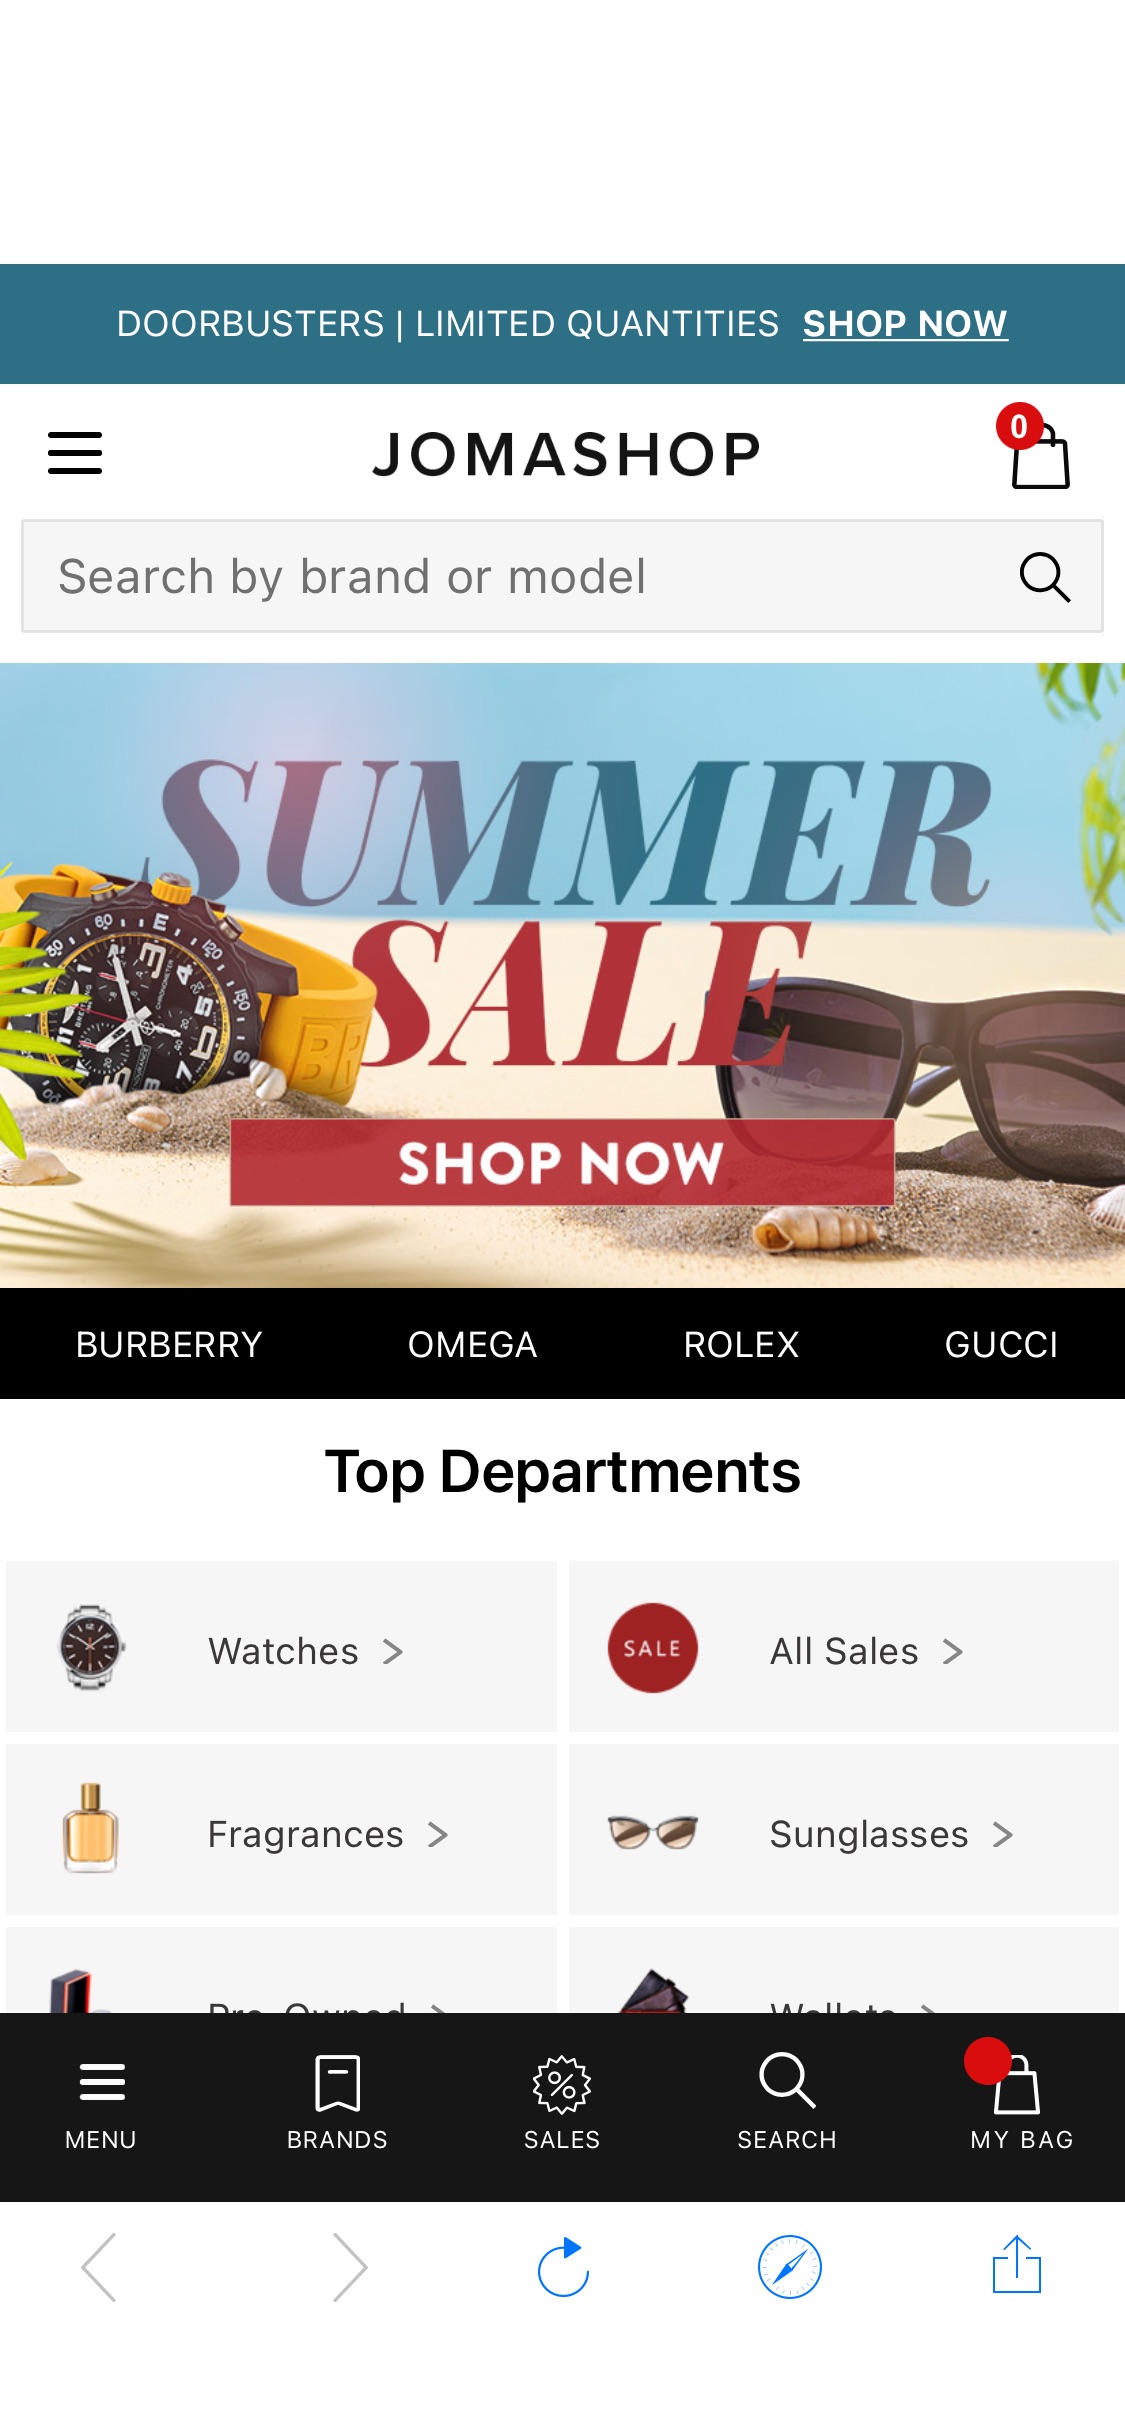 Jomashop.com: Online Shopping for Watches, Handbags, Sunglasses, Apparel, Beauty, Shoes, Pens & more - Jomashop
最新优惠！欧米加手表优惠大促，低至4.8折